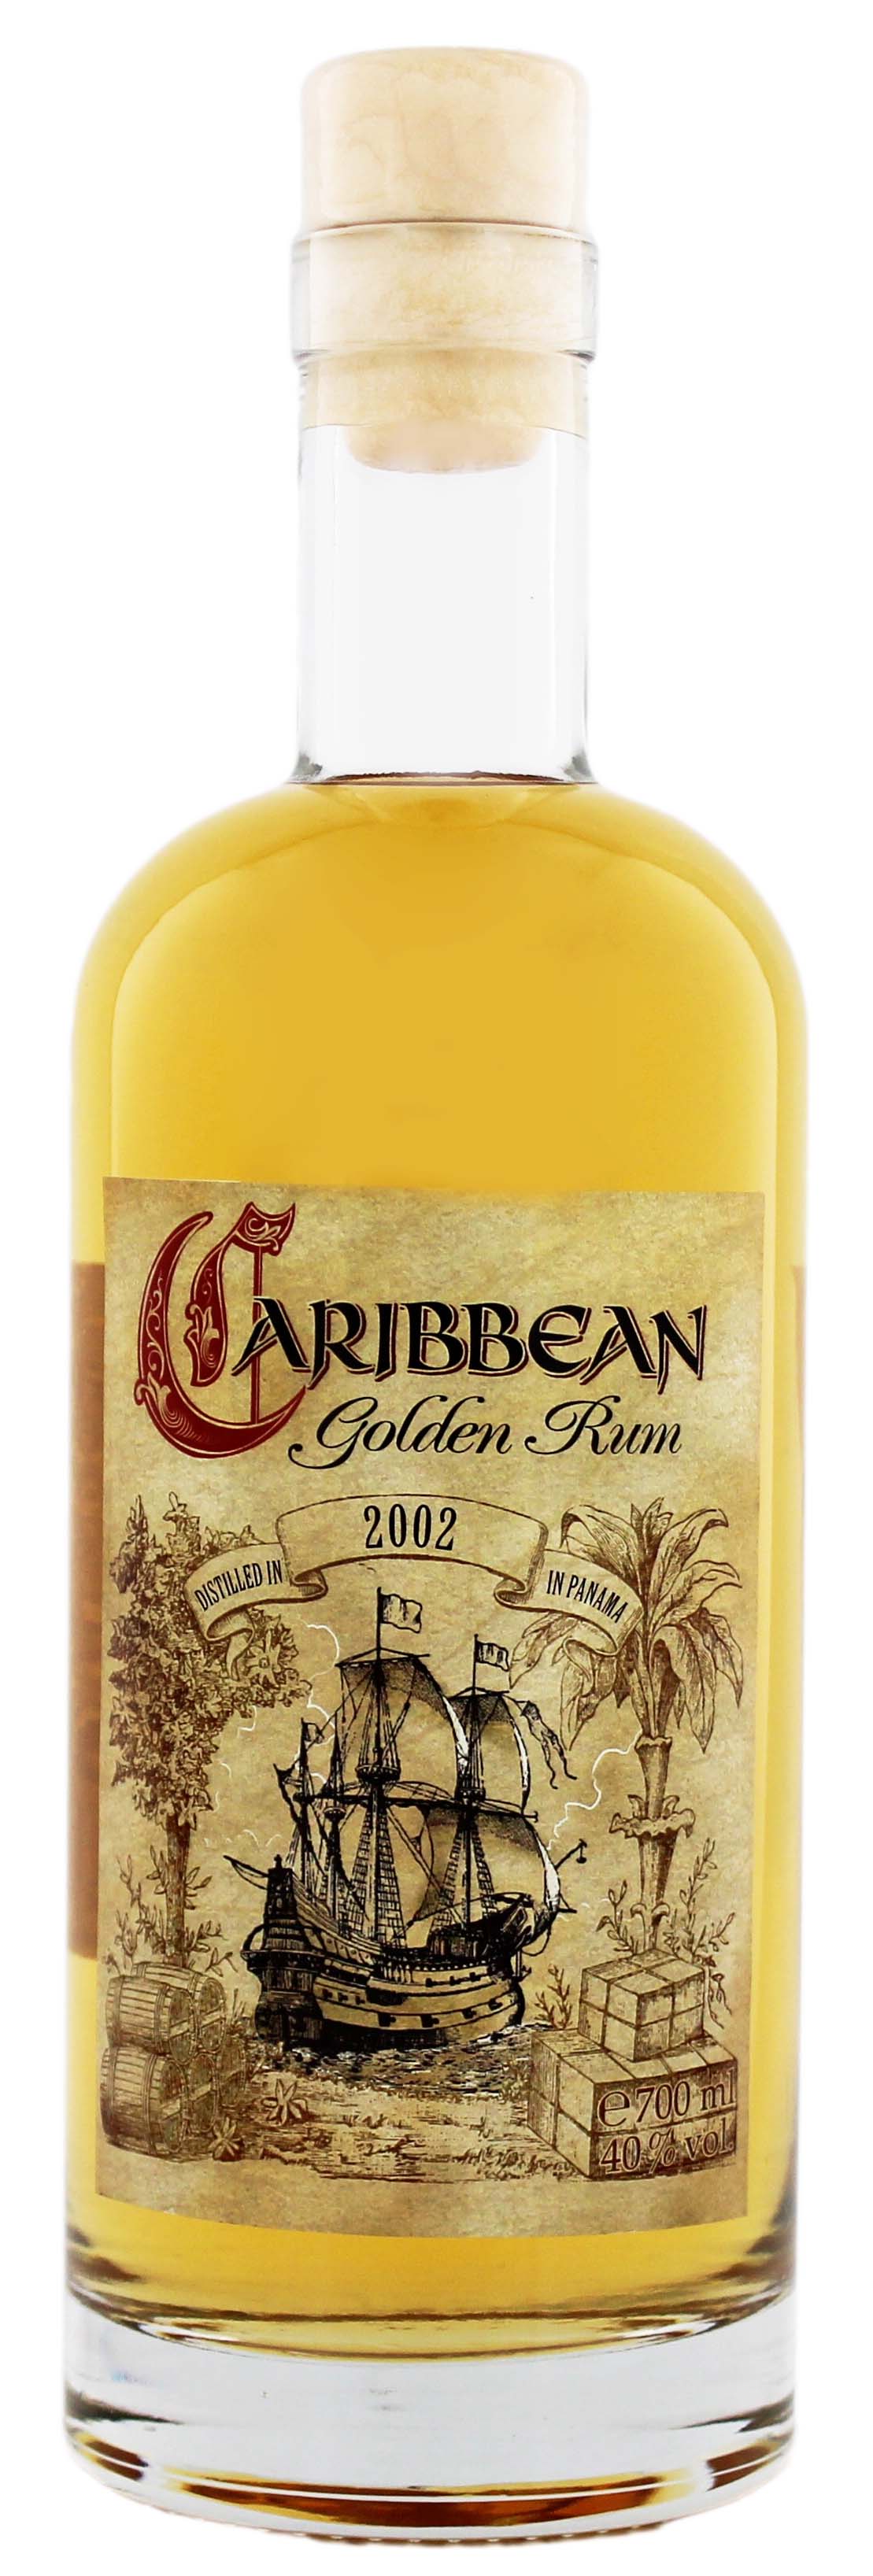 Caribbean Golden Rum 2002 Kaufen Rum Online Shop And Spirituosen